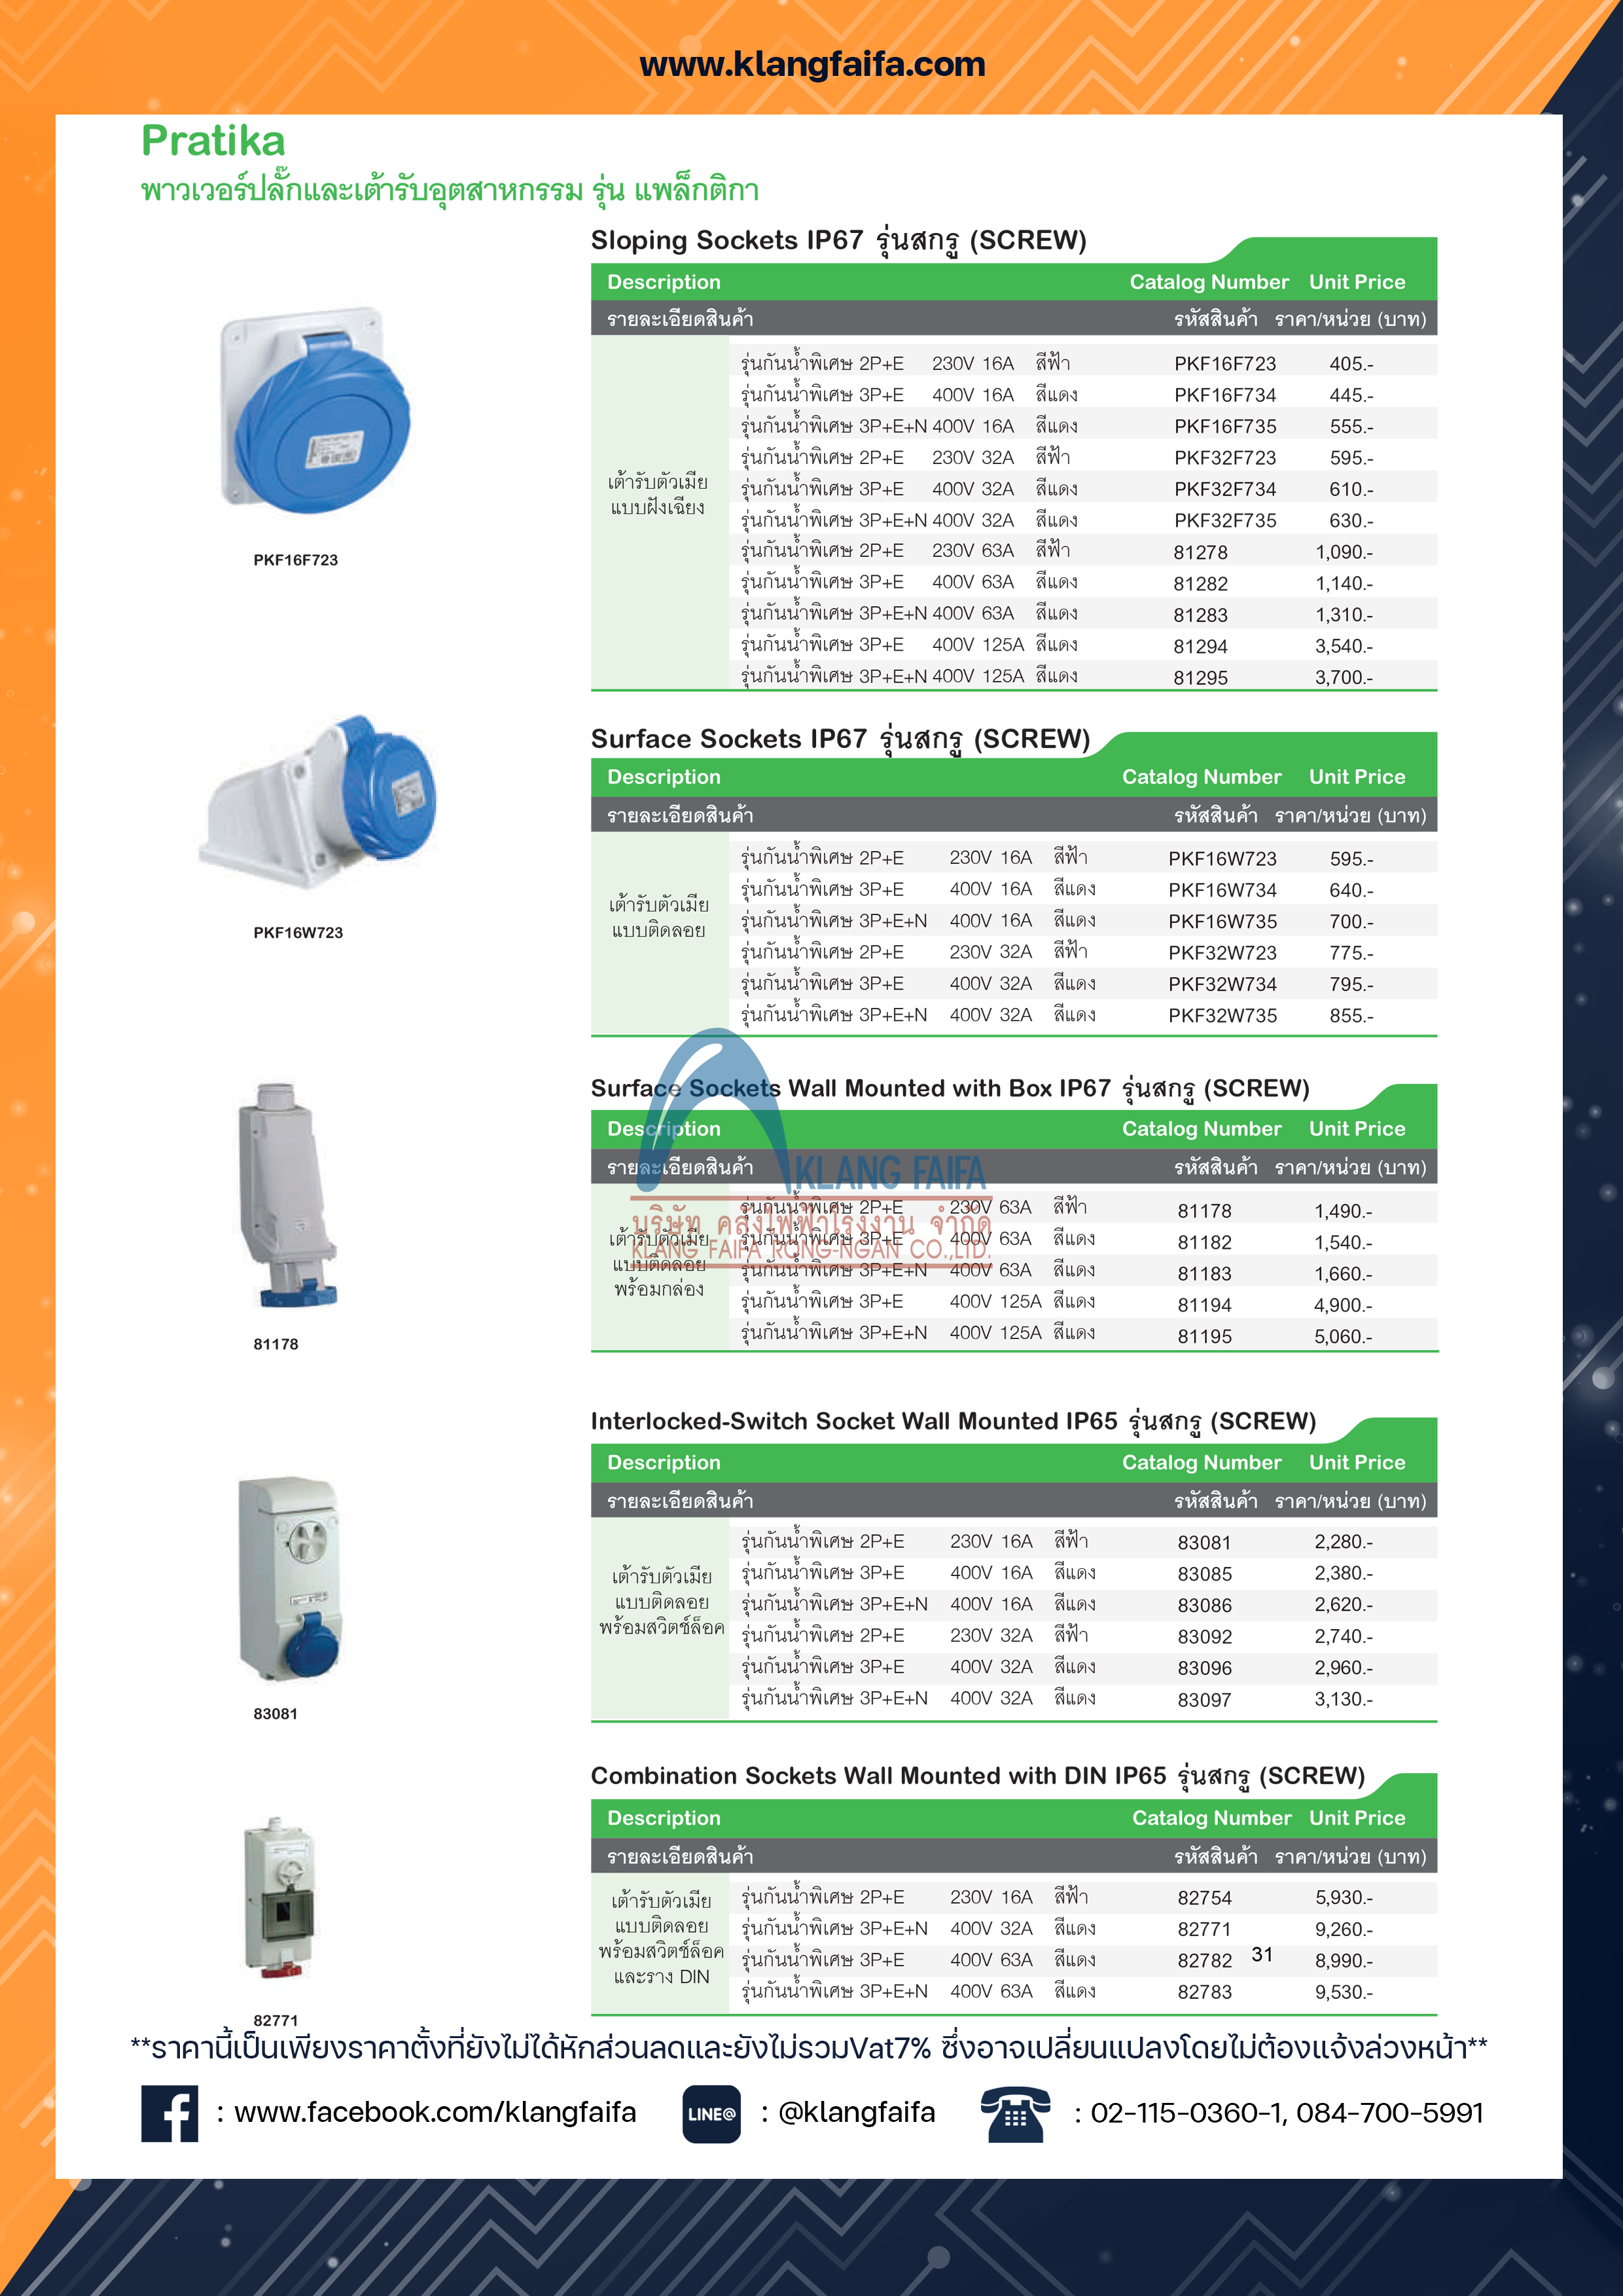 Schneider, Powerplug, Pratika , wallmount, Surface socket, Sloping Socket, Interlock-Switch